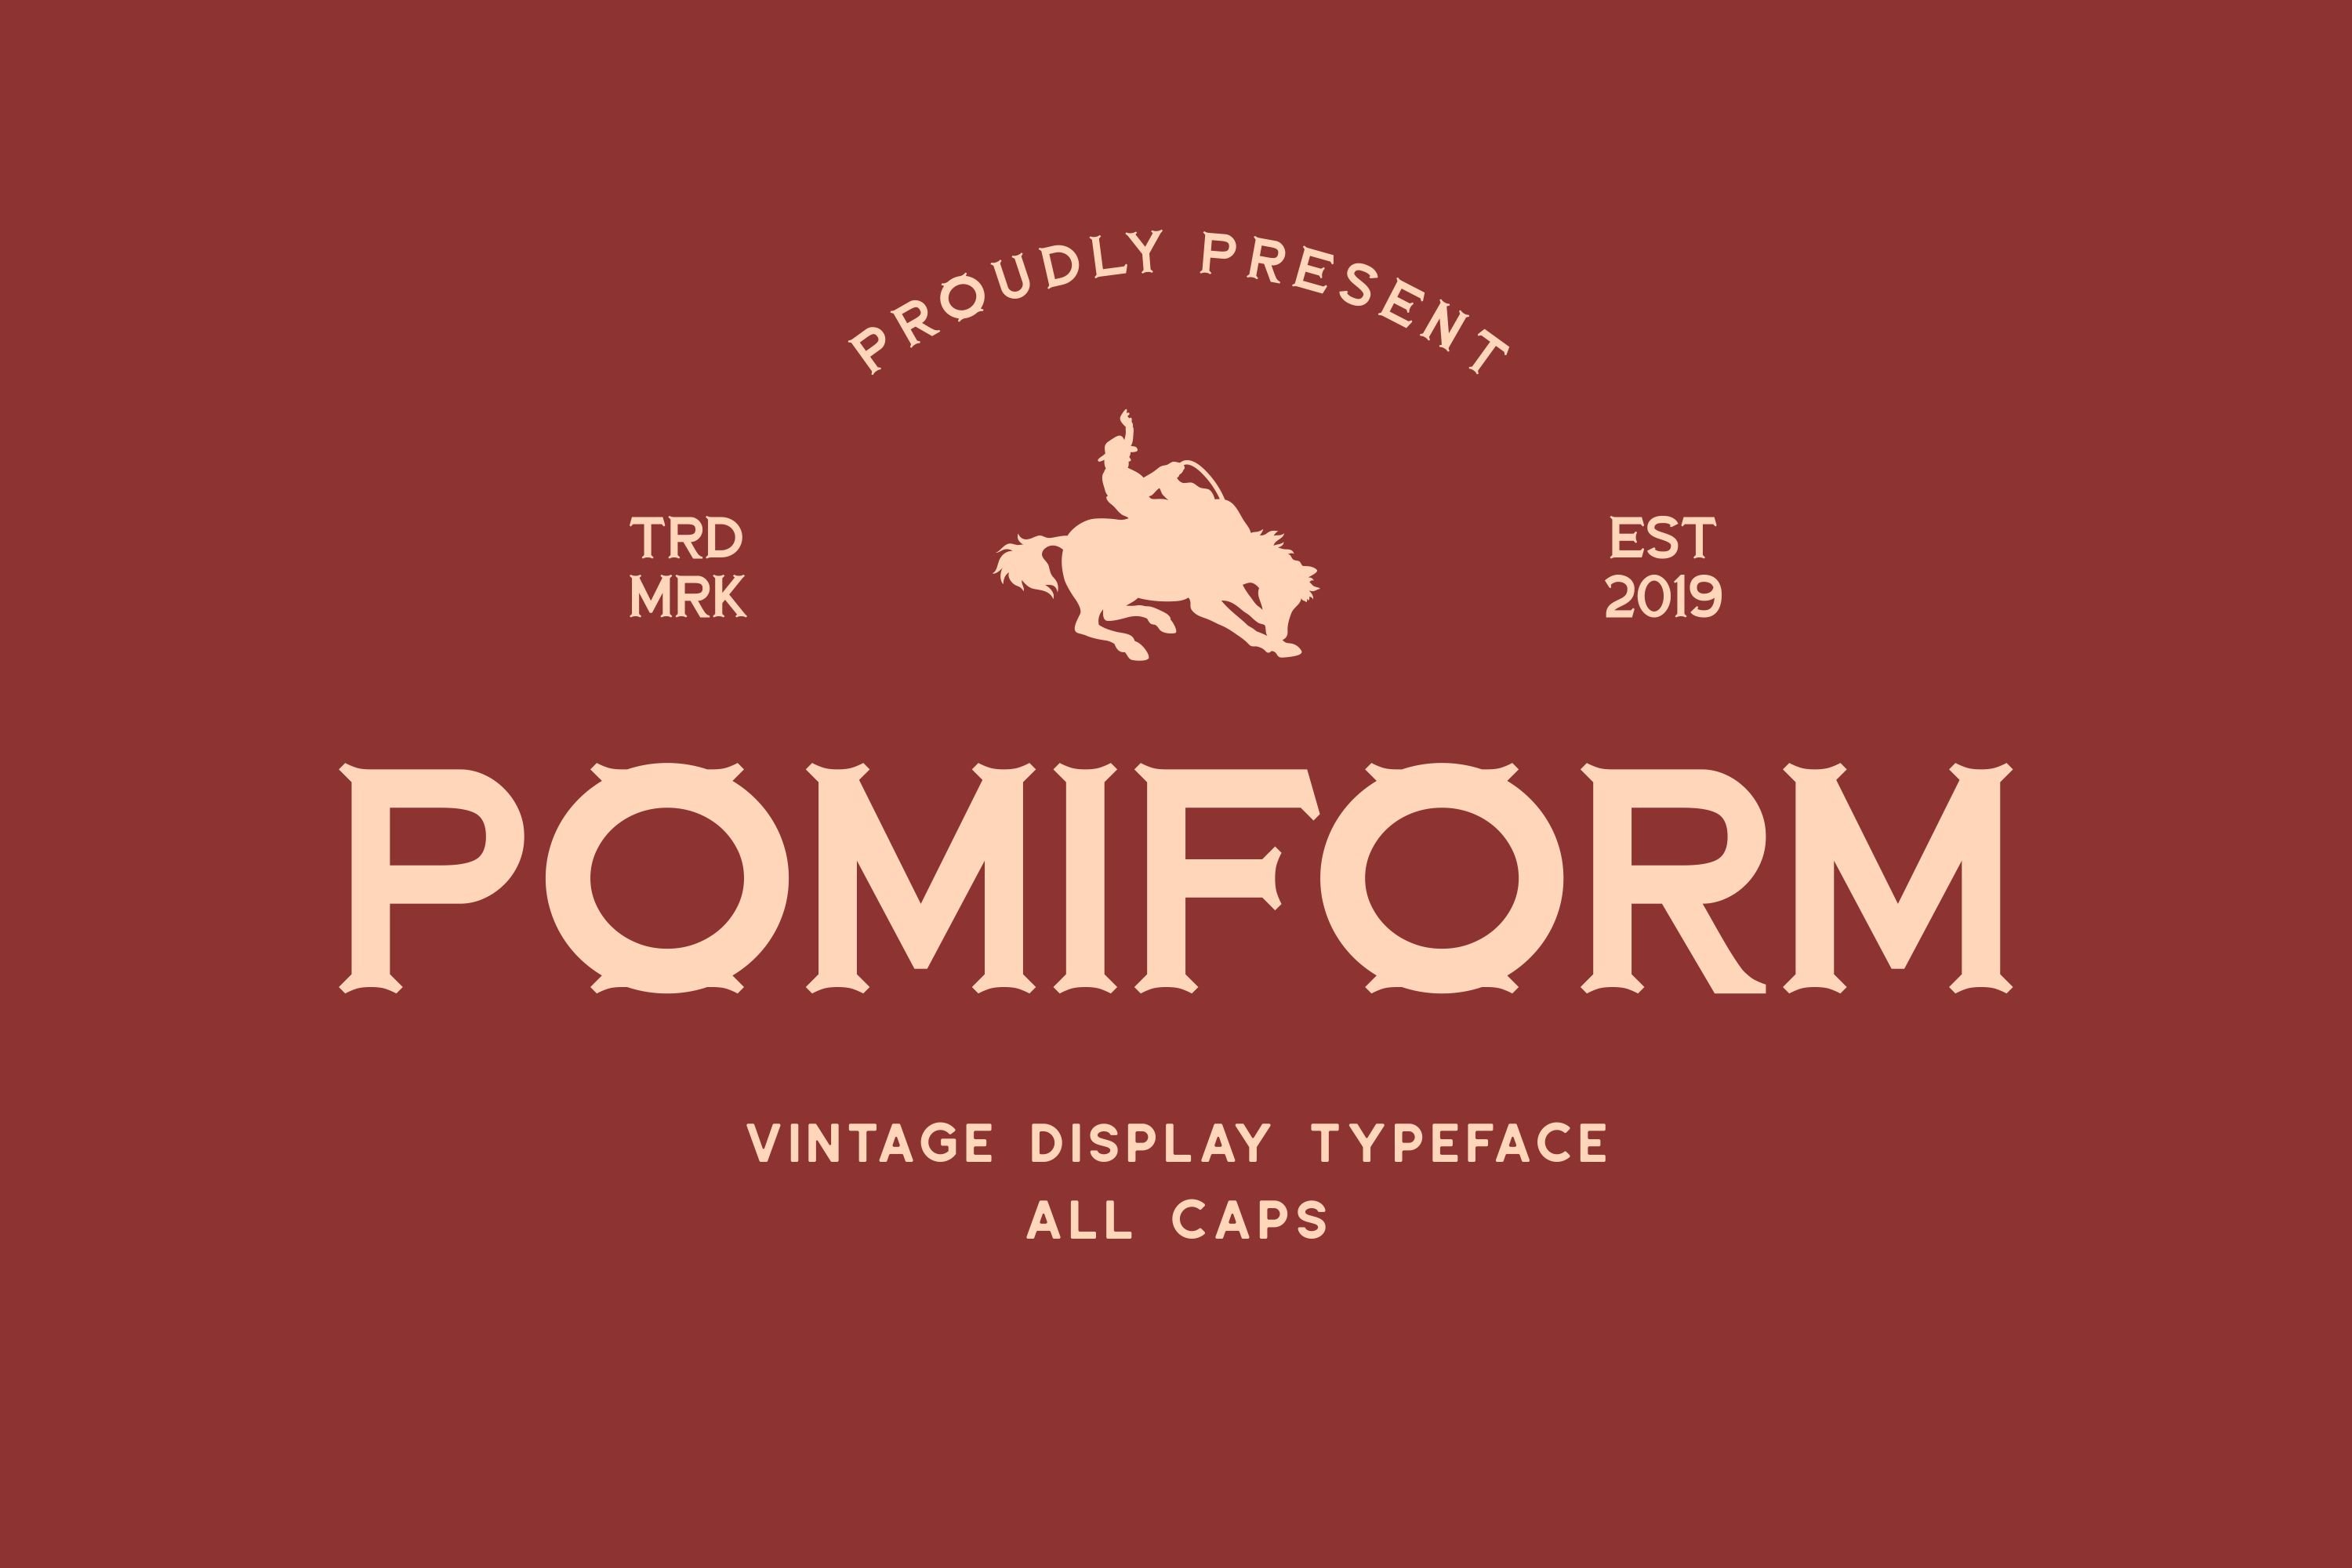 Pomiform – Vintage Display Typeface cover image.